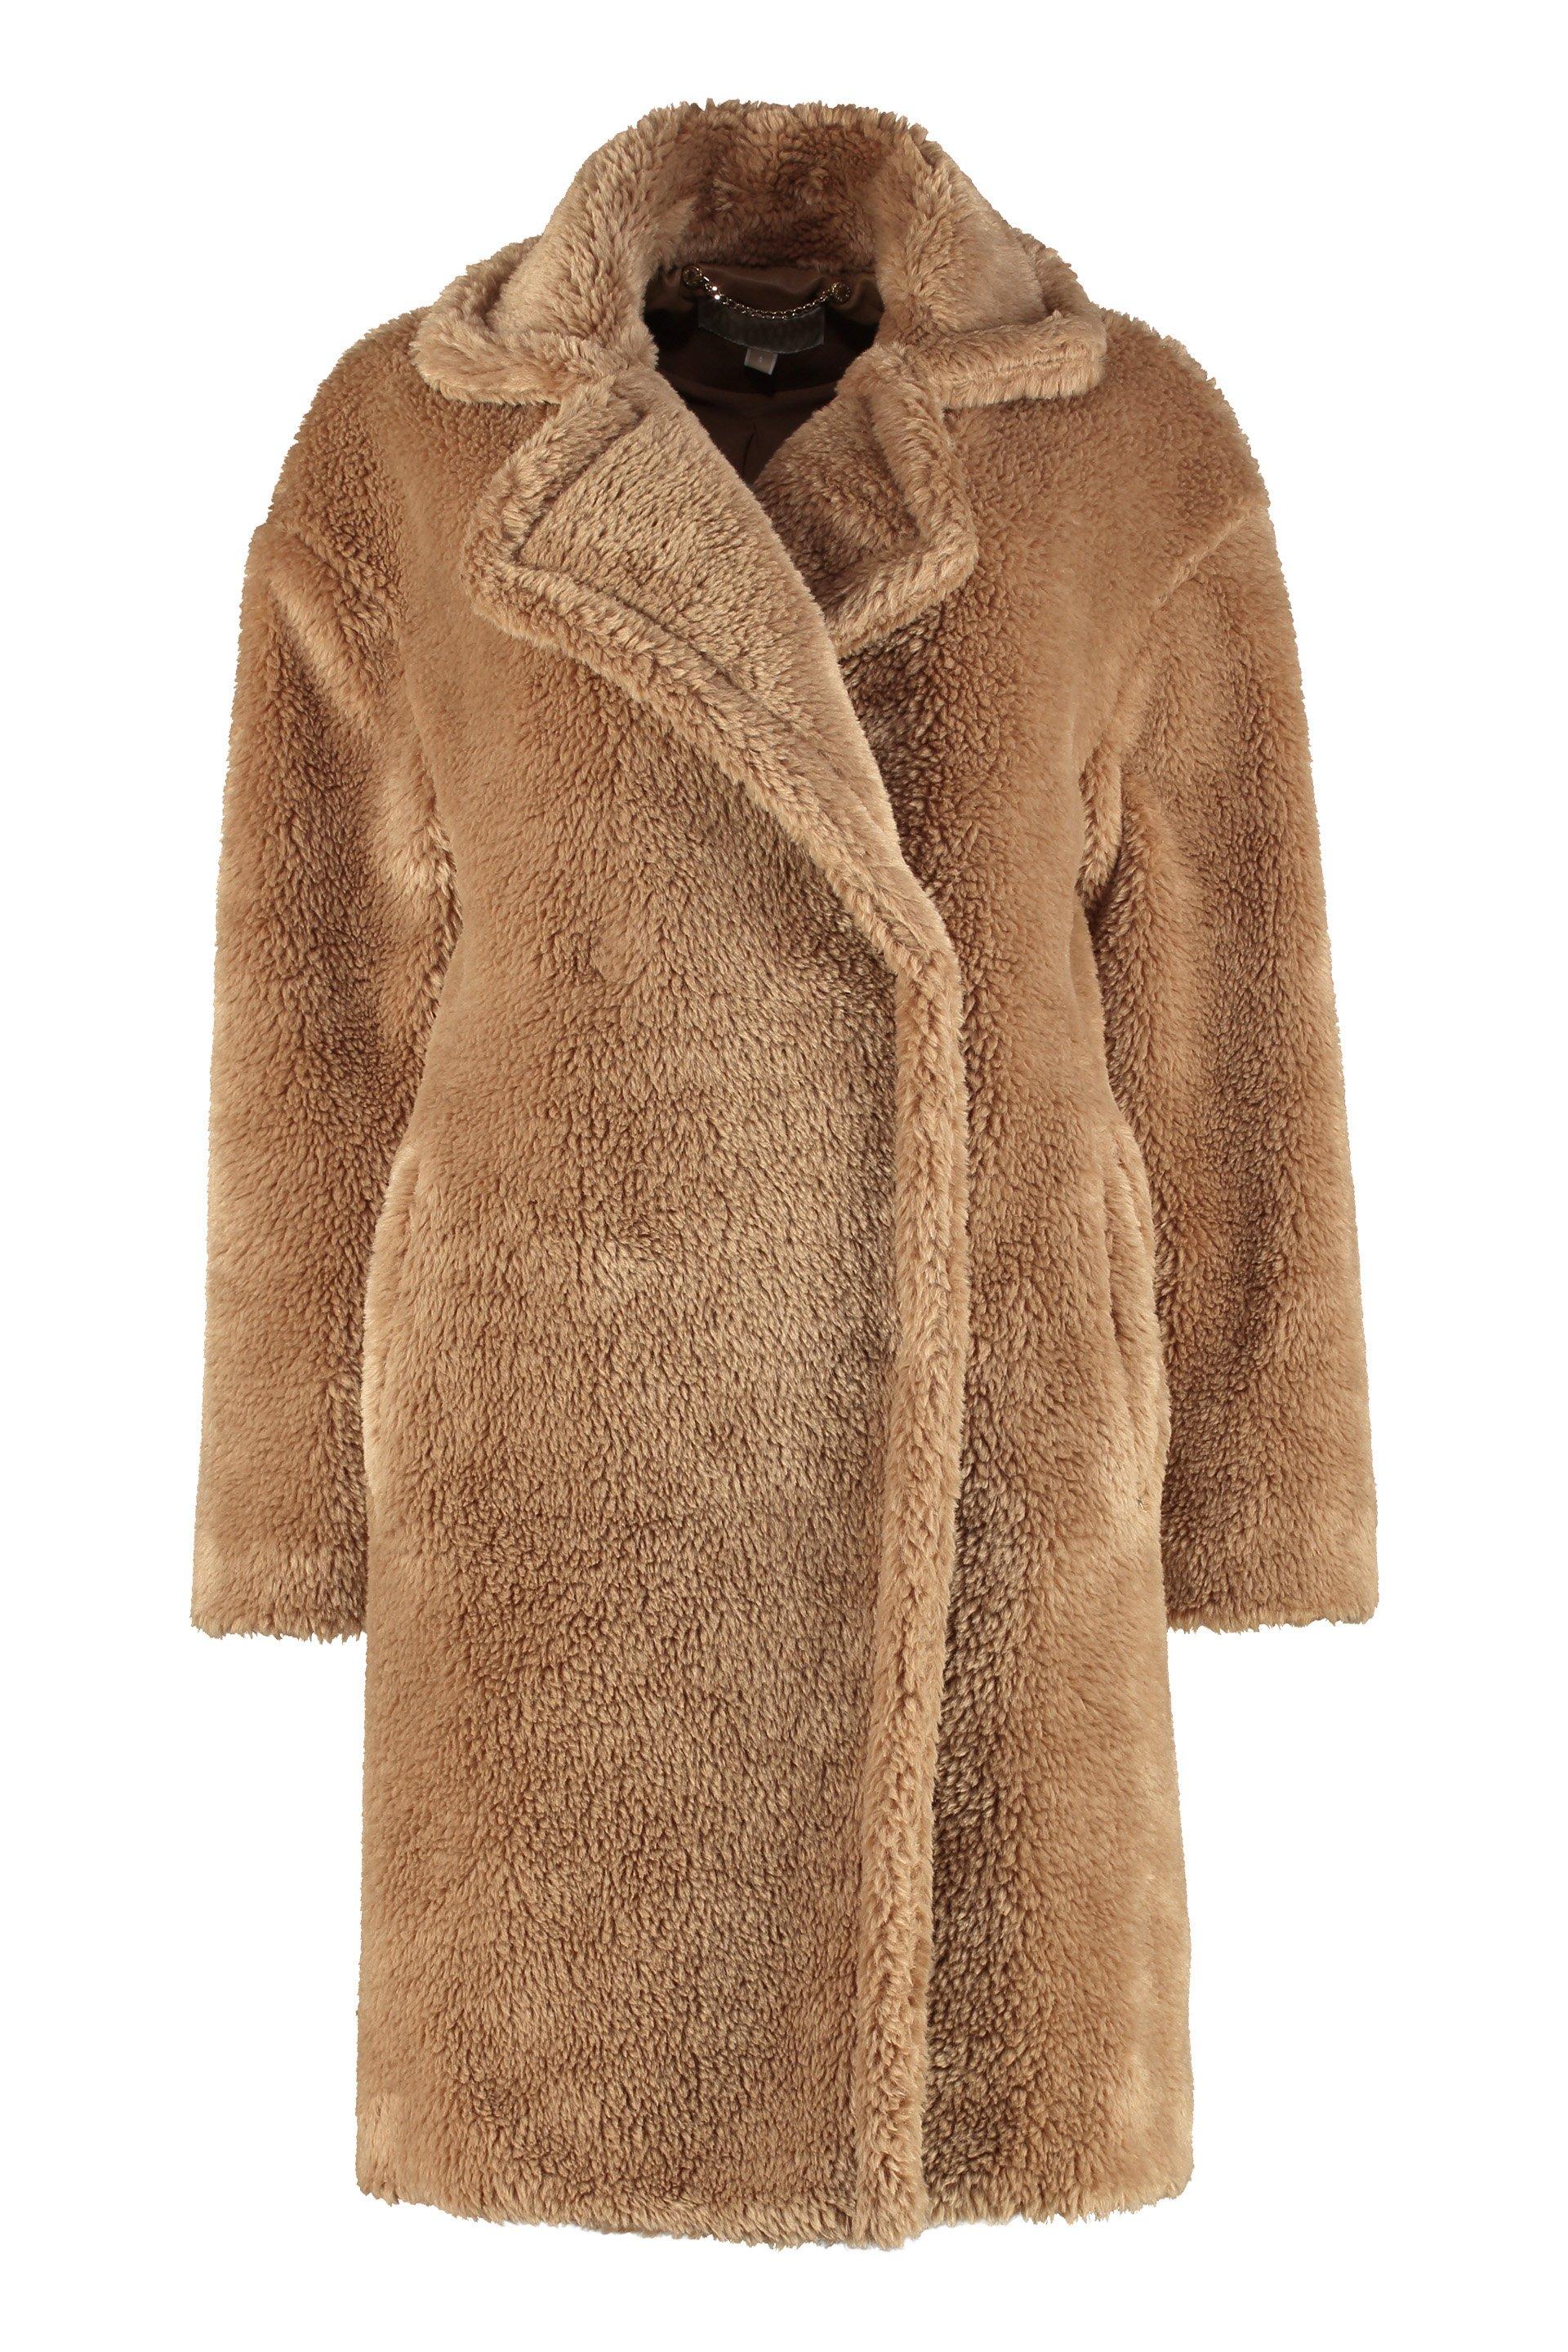 MICHAEL Michael Kors Oversized Teddy Coat in Brown | Lyst